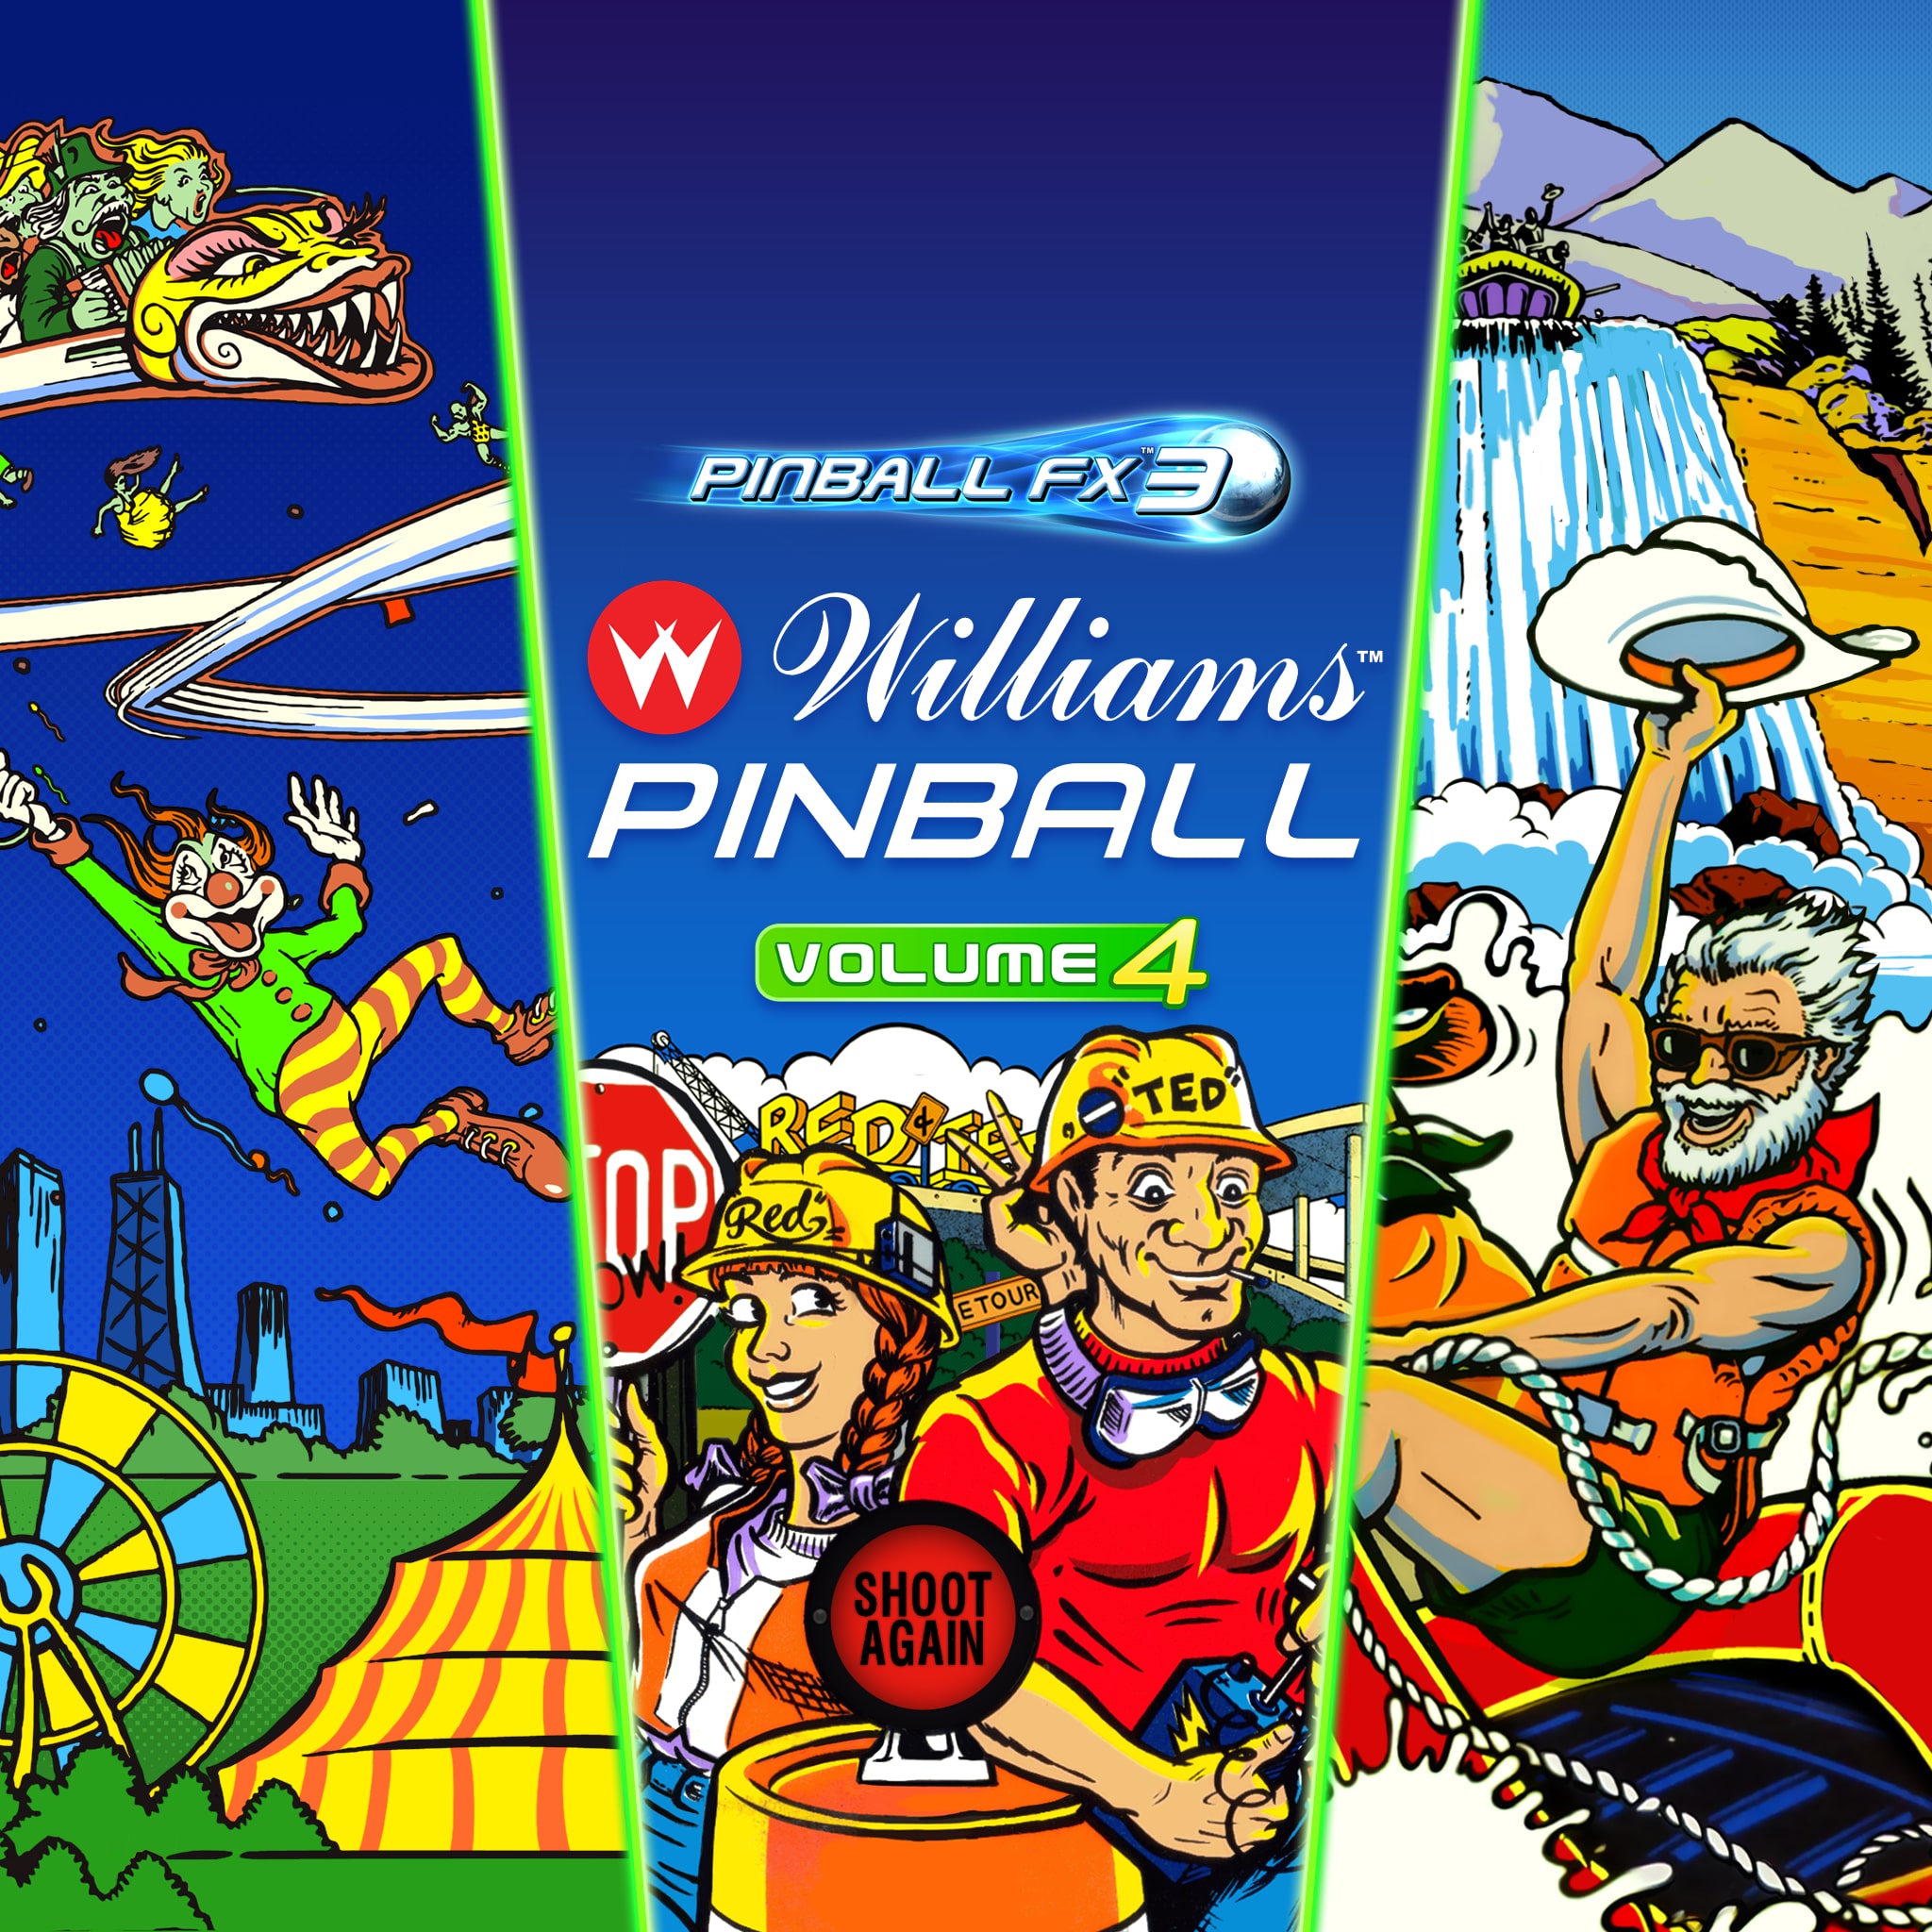 Pinball FX3 - Williams™ Pinball: Volume 4 Demo